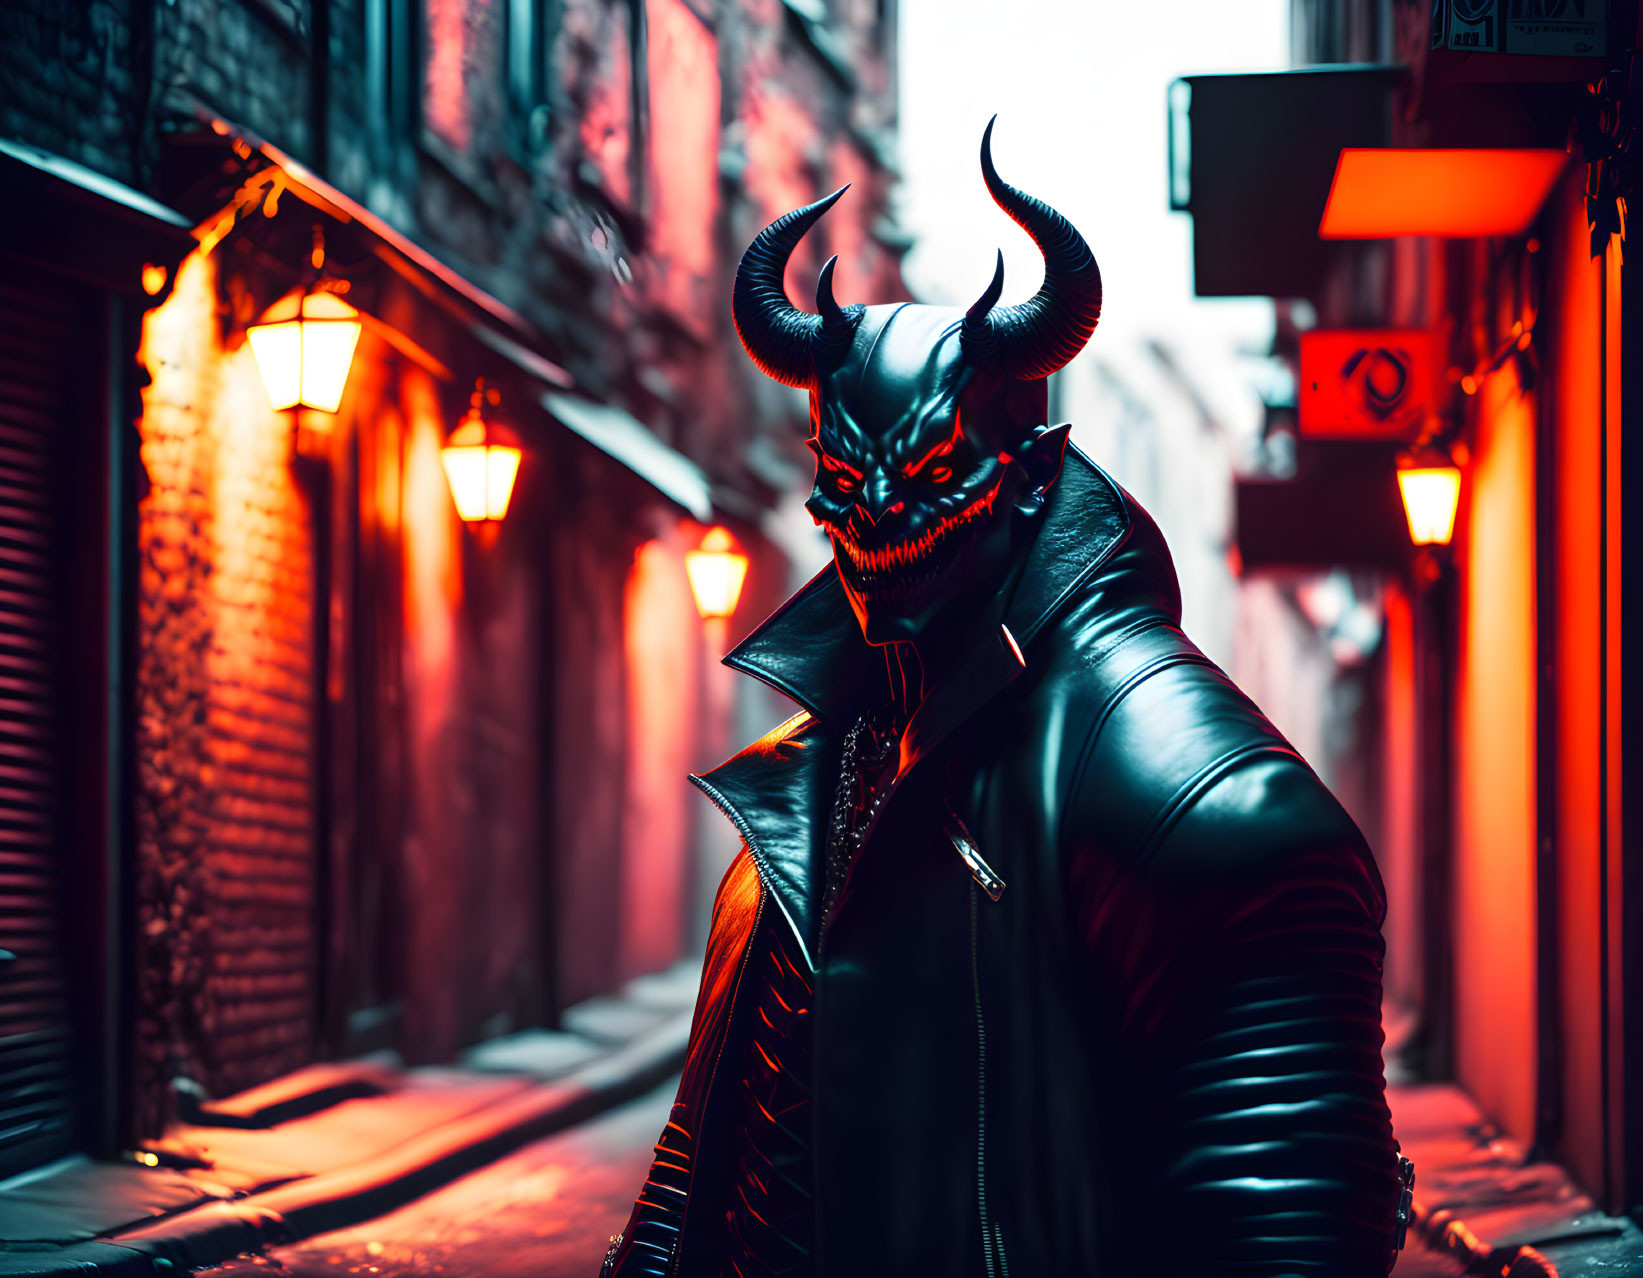 Demon costume person in leather jacket walking in red-lit urban alleyway